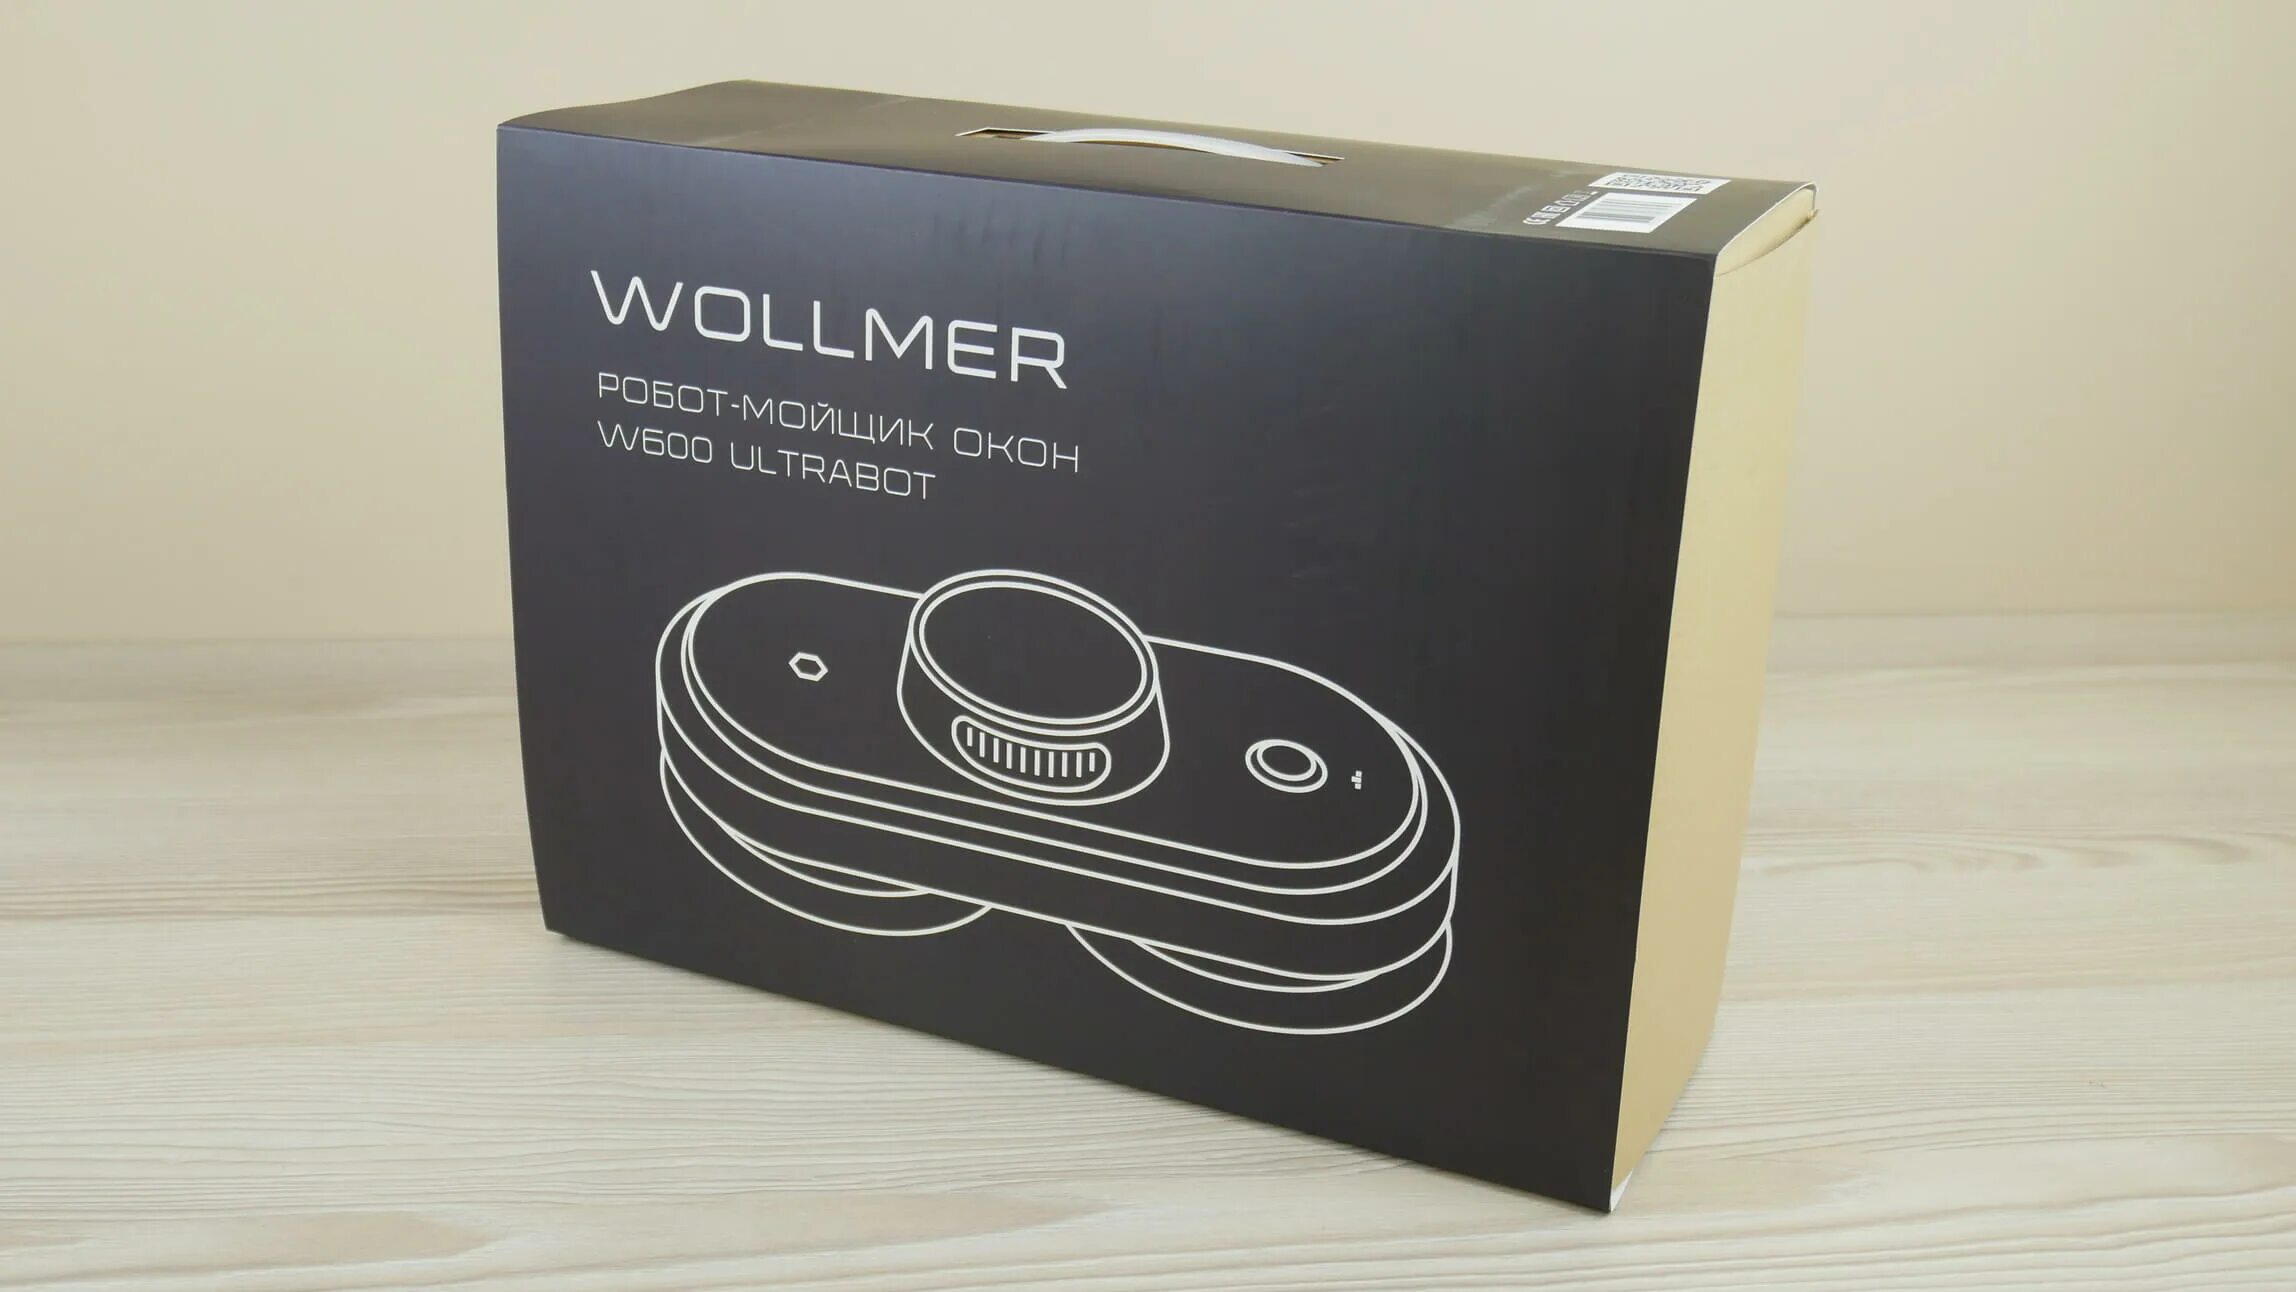 Wollmer d707 maxi. Робот Wollmer w600 Ultrabo. Робот-стеклоочиститель Wollmer w600 Ultrabot. Wollmer w600 Ultrabot мойщик. Wollmer w600 Ultrabot характеристики.